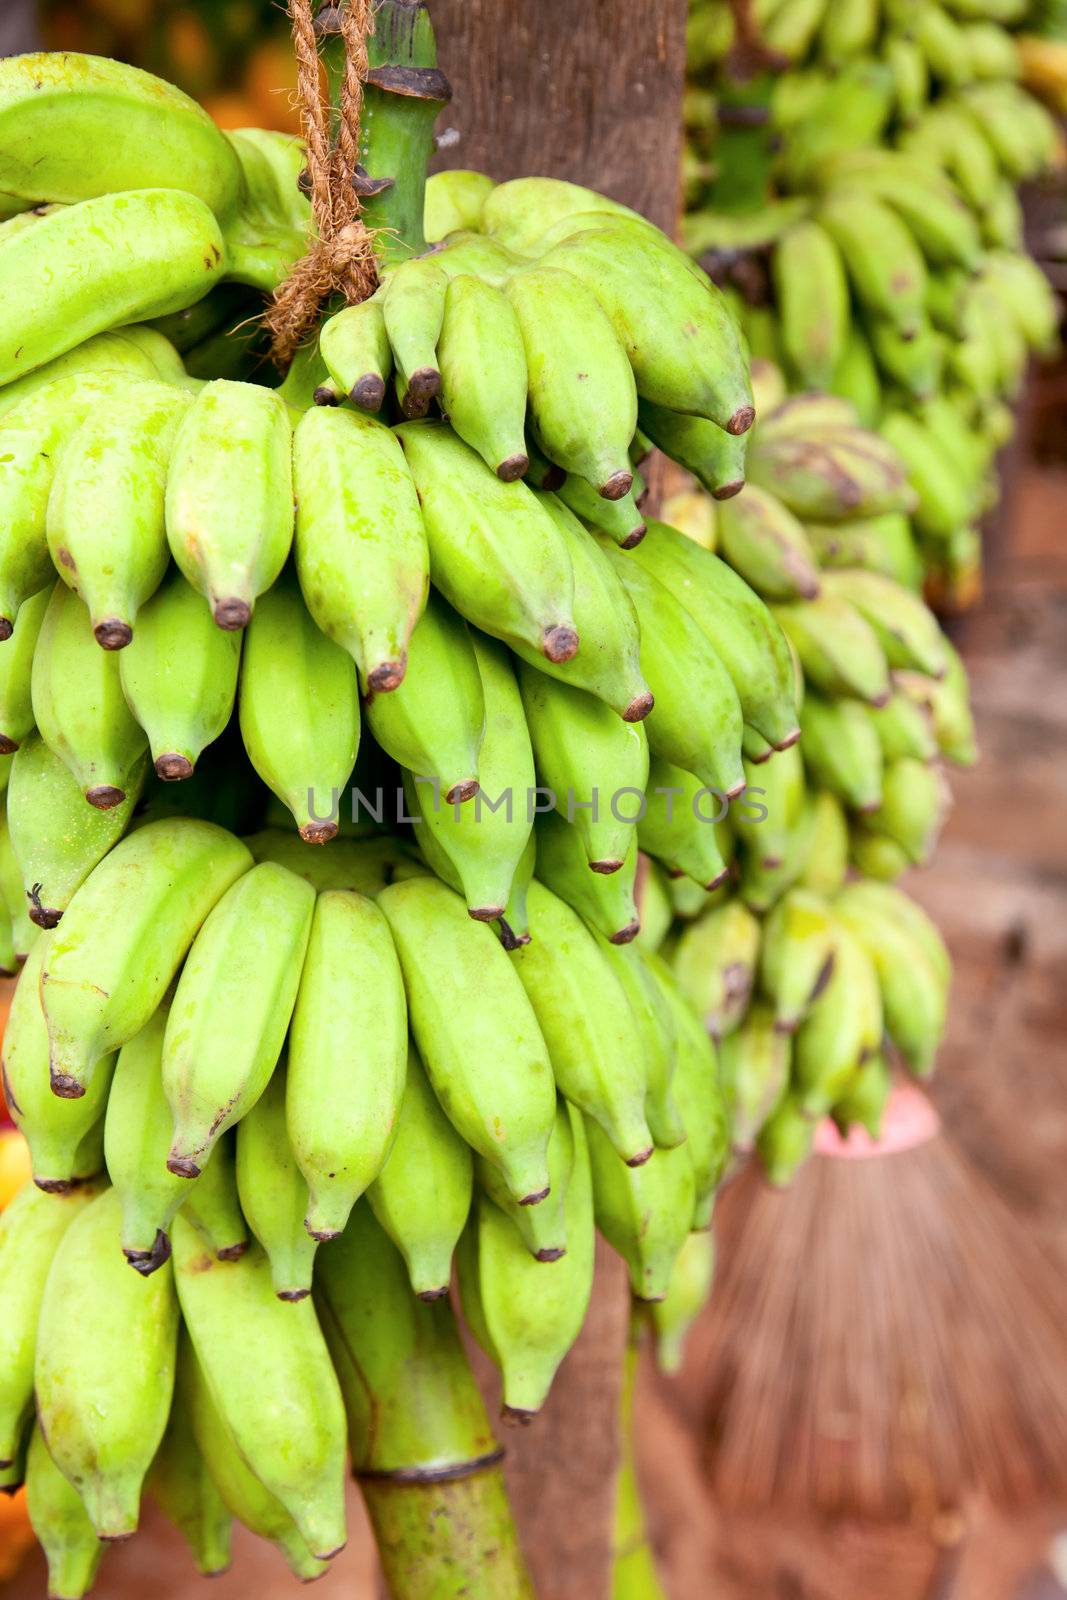 Bunch of green bananas for sale in Sri Lanka